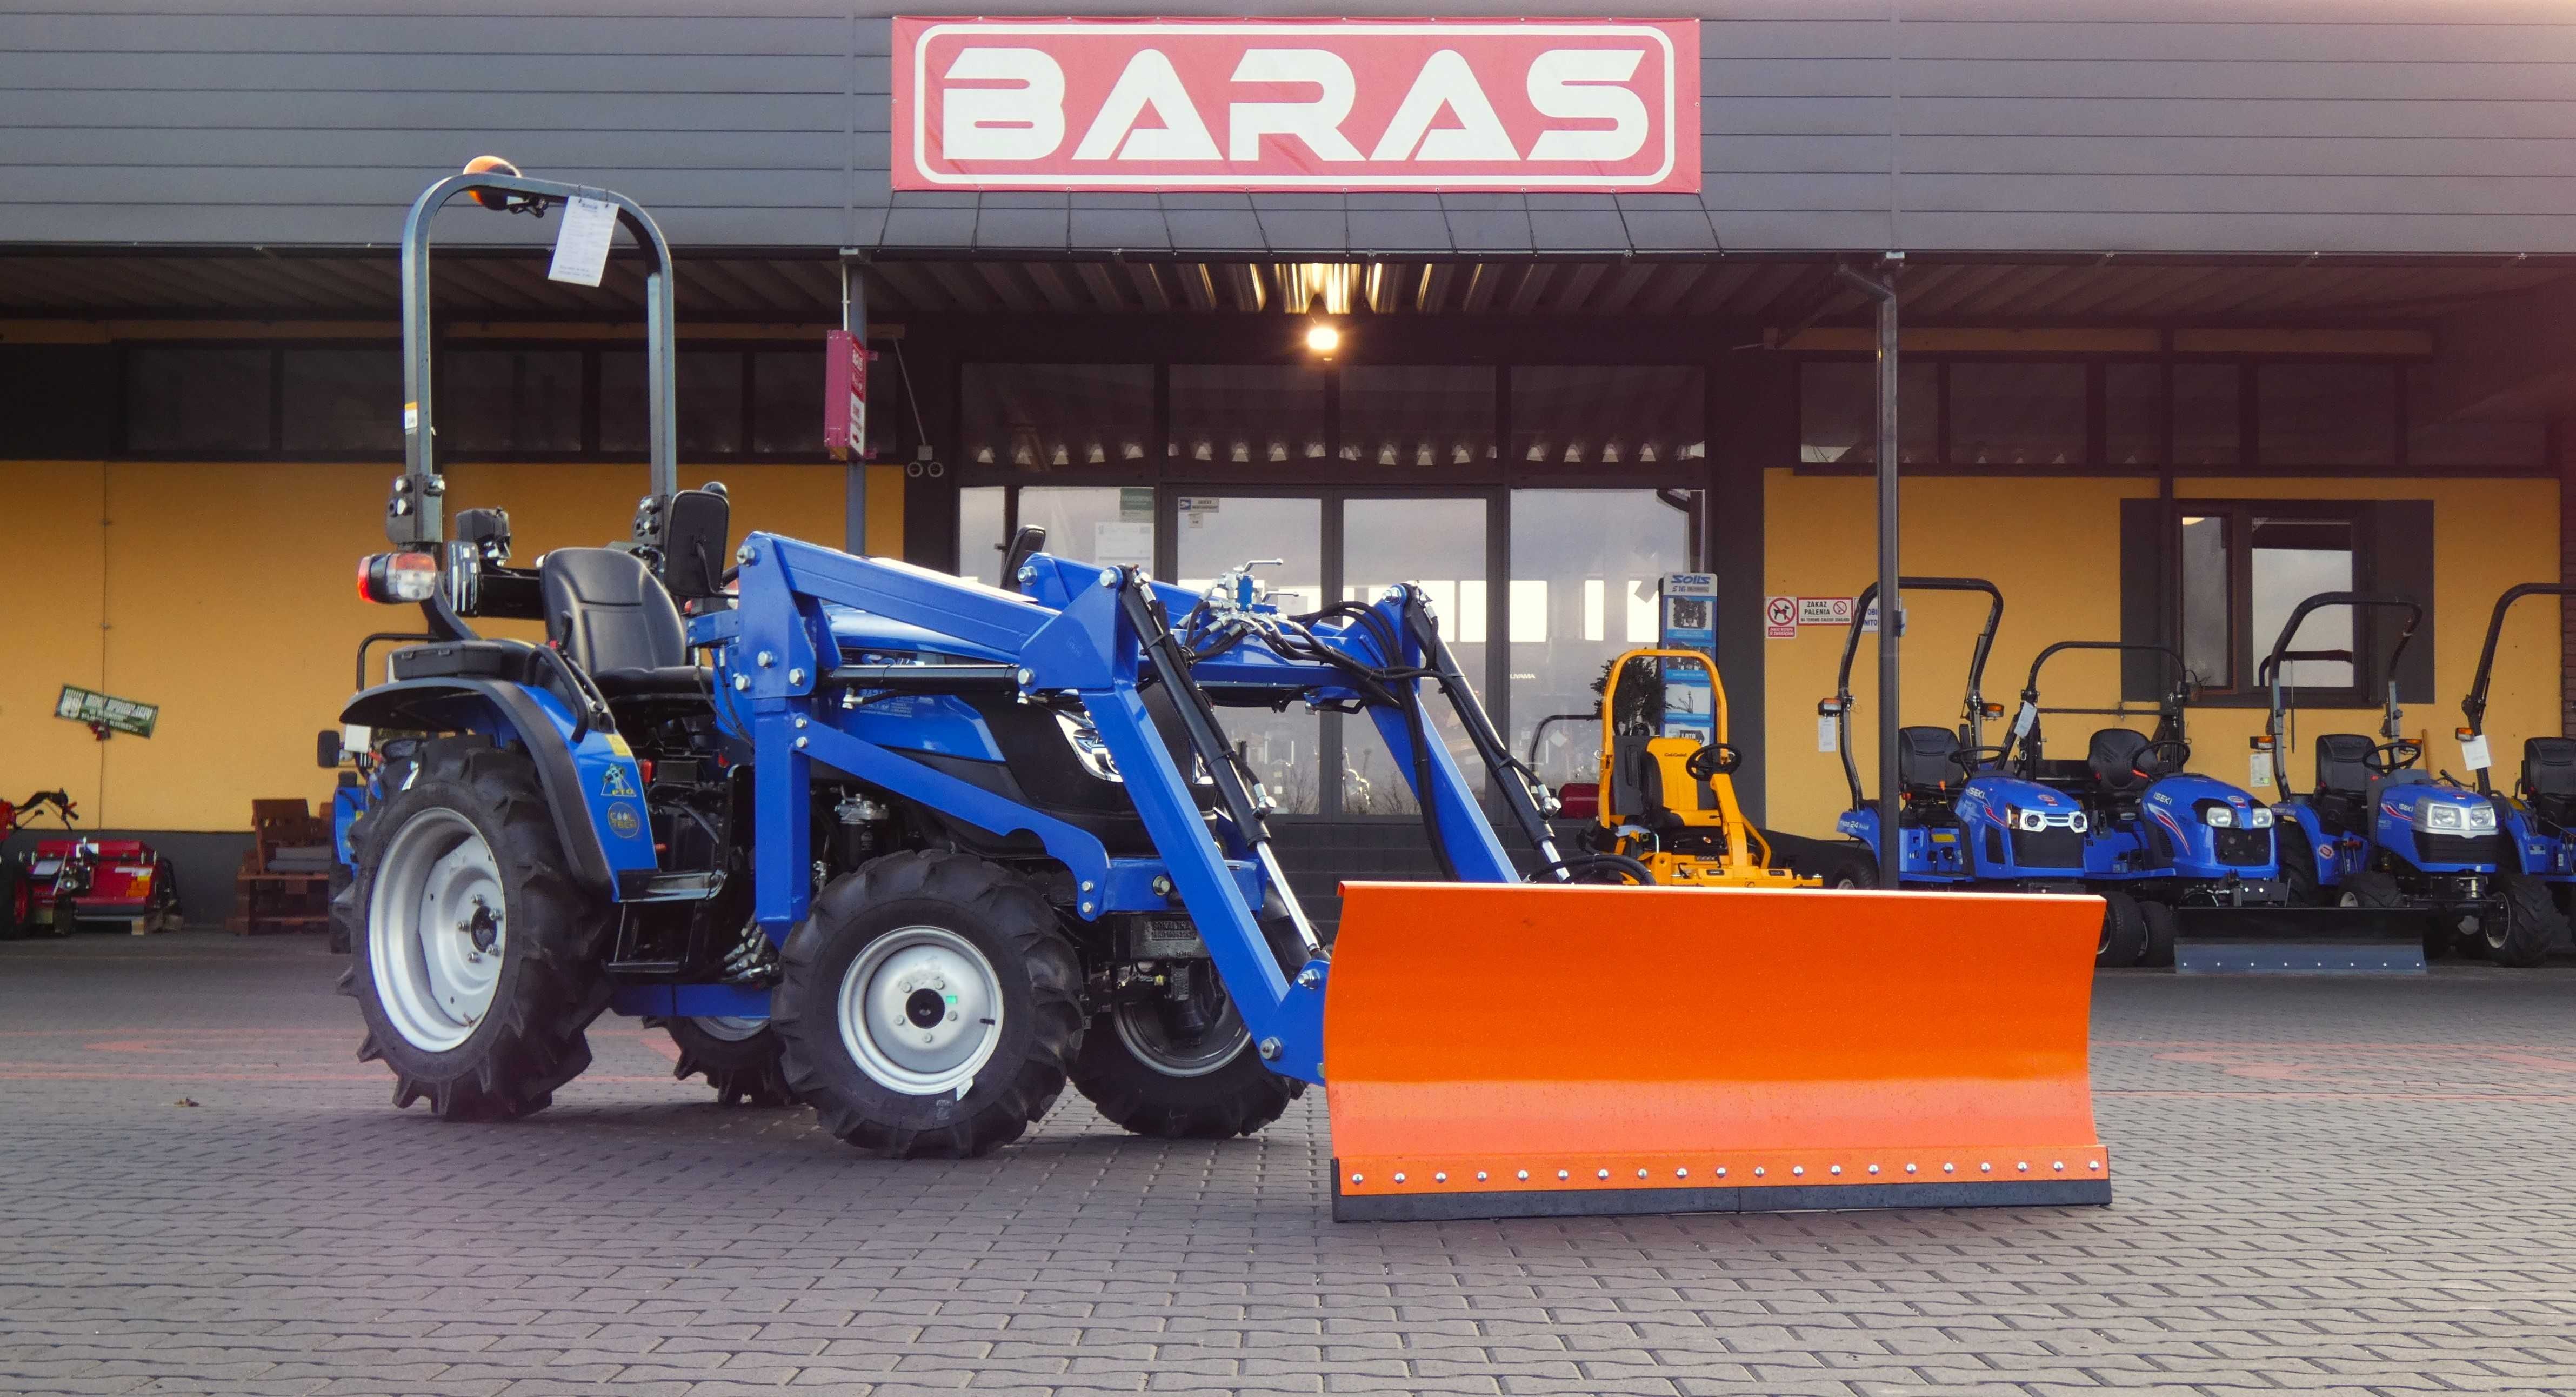 Traktor Solis 26 4x4 Ładowacz Tur Diesel - Baras